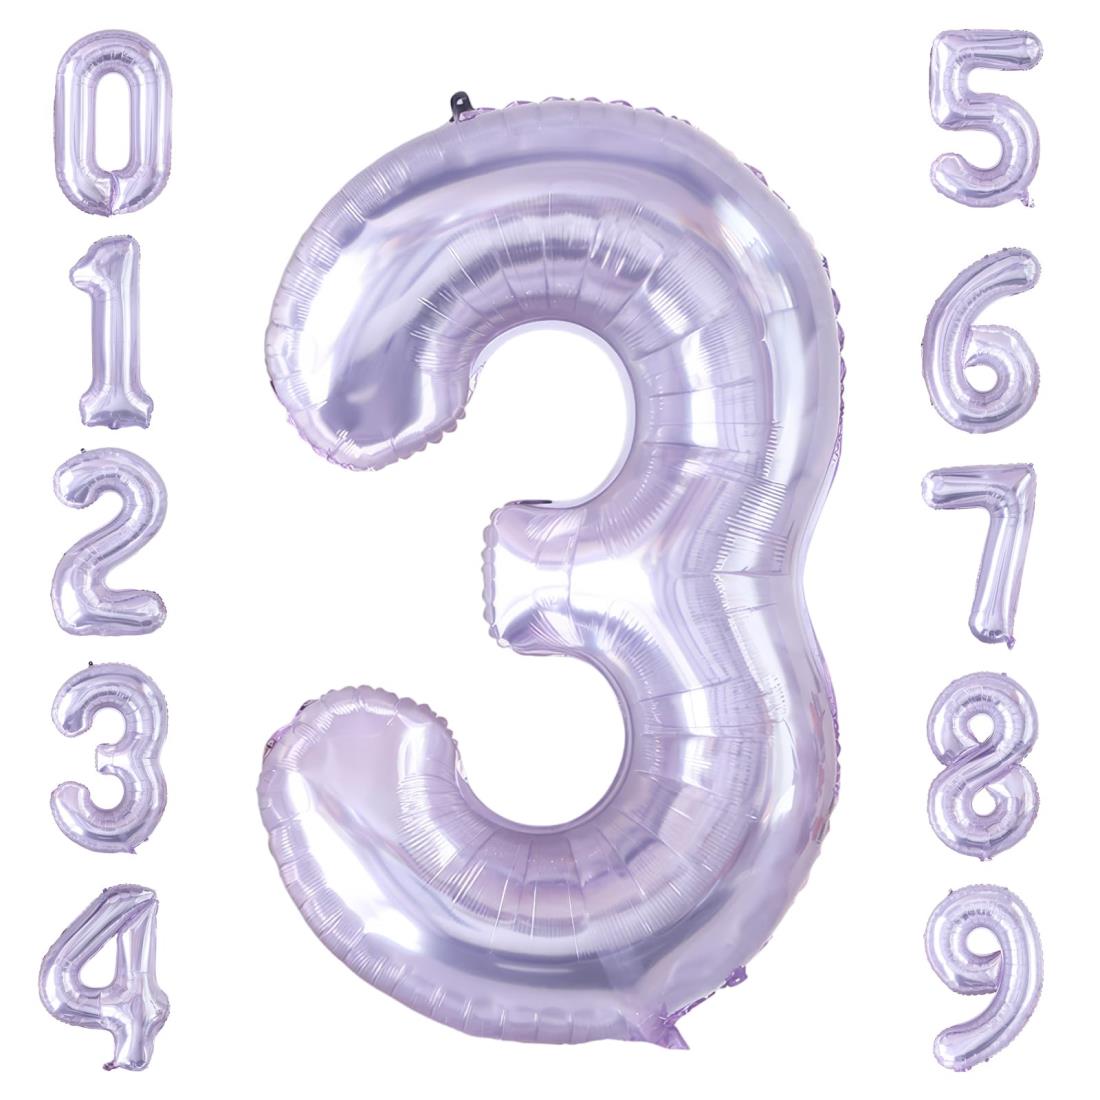 GRESATEK バルーン 数字 風船 誕生日 紫 40インチ 大きい ナンバー3 バースデーバルーン 飾り付け 結婚式 パーティー 記念日 ウェディング クリスタル ゼリー クリスタル パープル 3